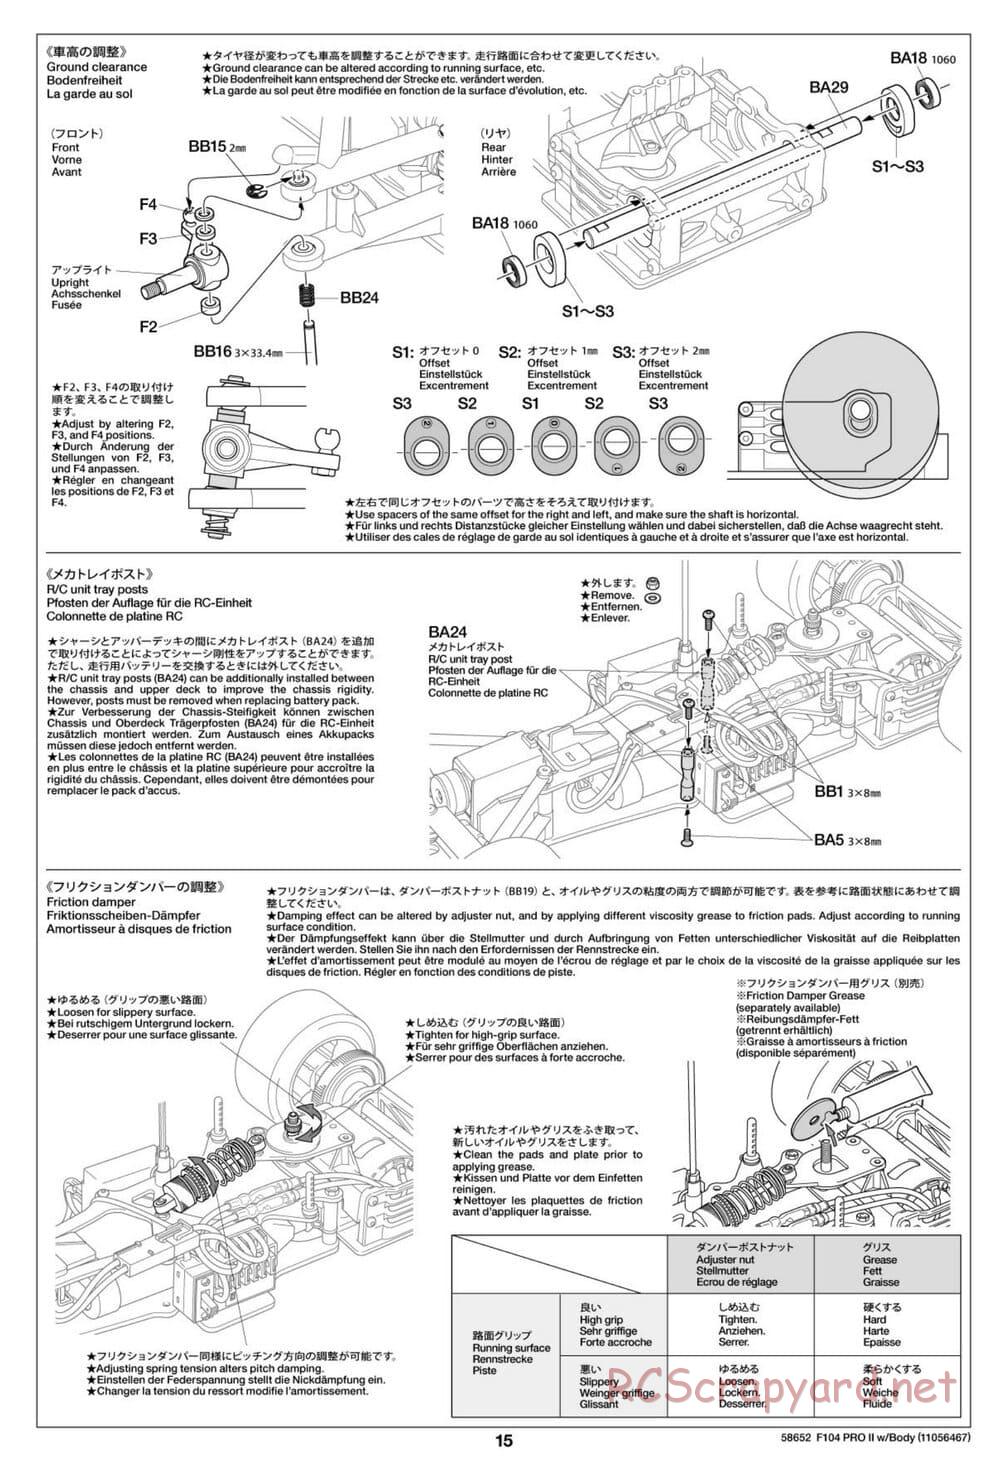 Tamiya - F104 Pro II Chassis - Manual - Page 15